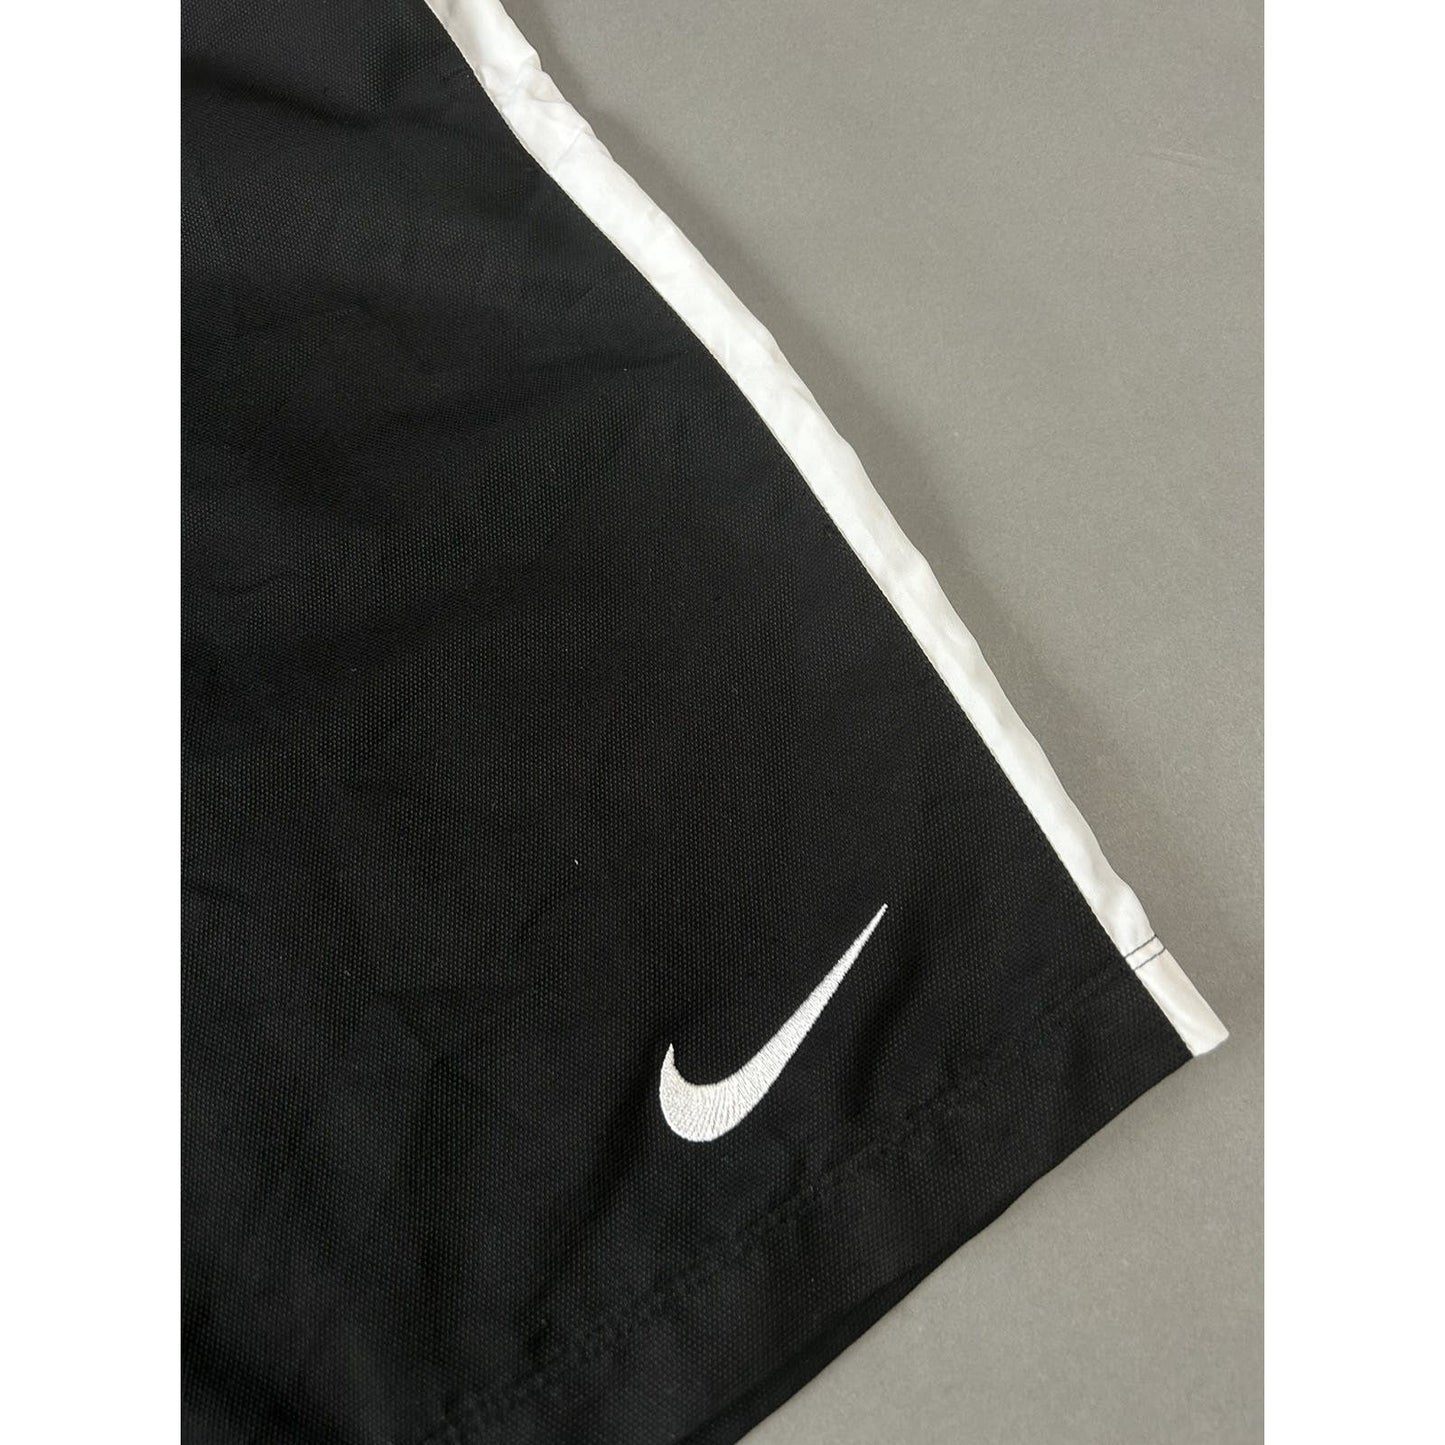 Nike vintage black shorts small swoosh